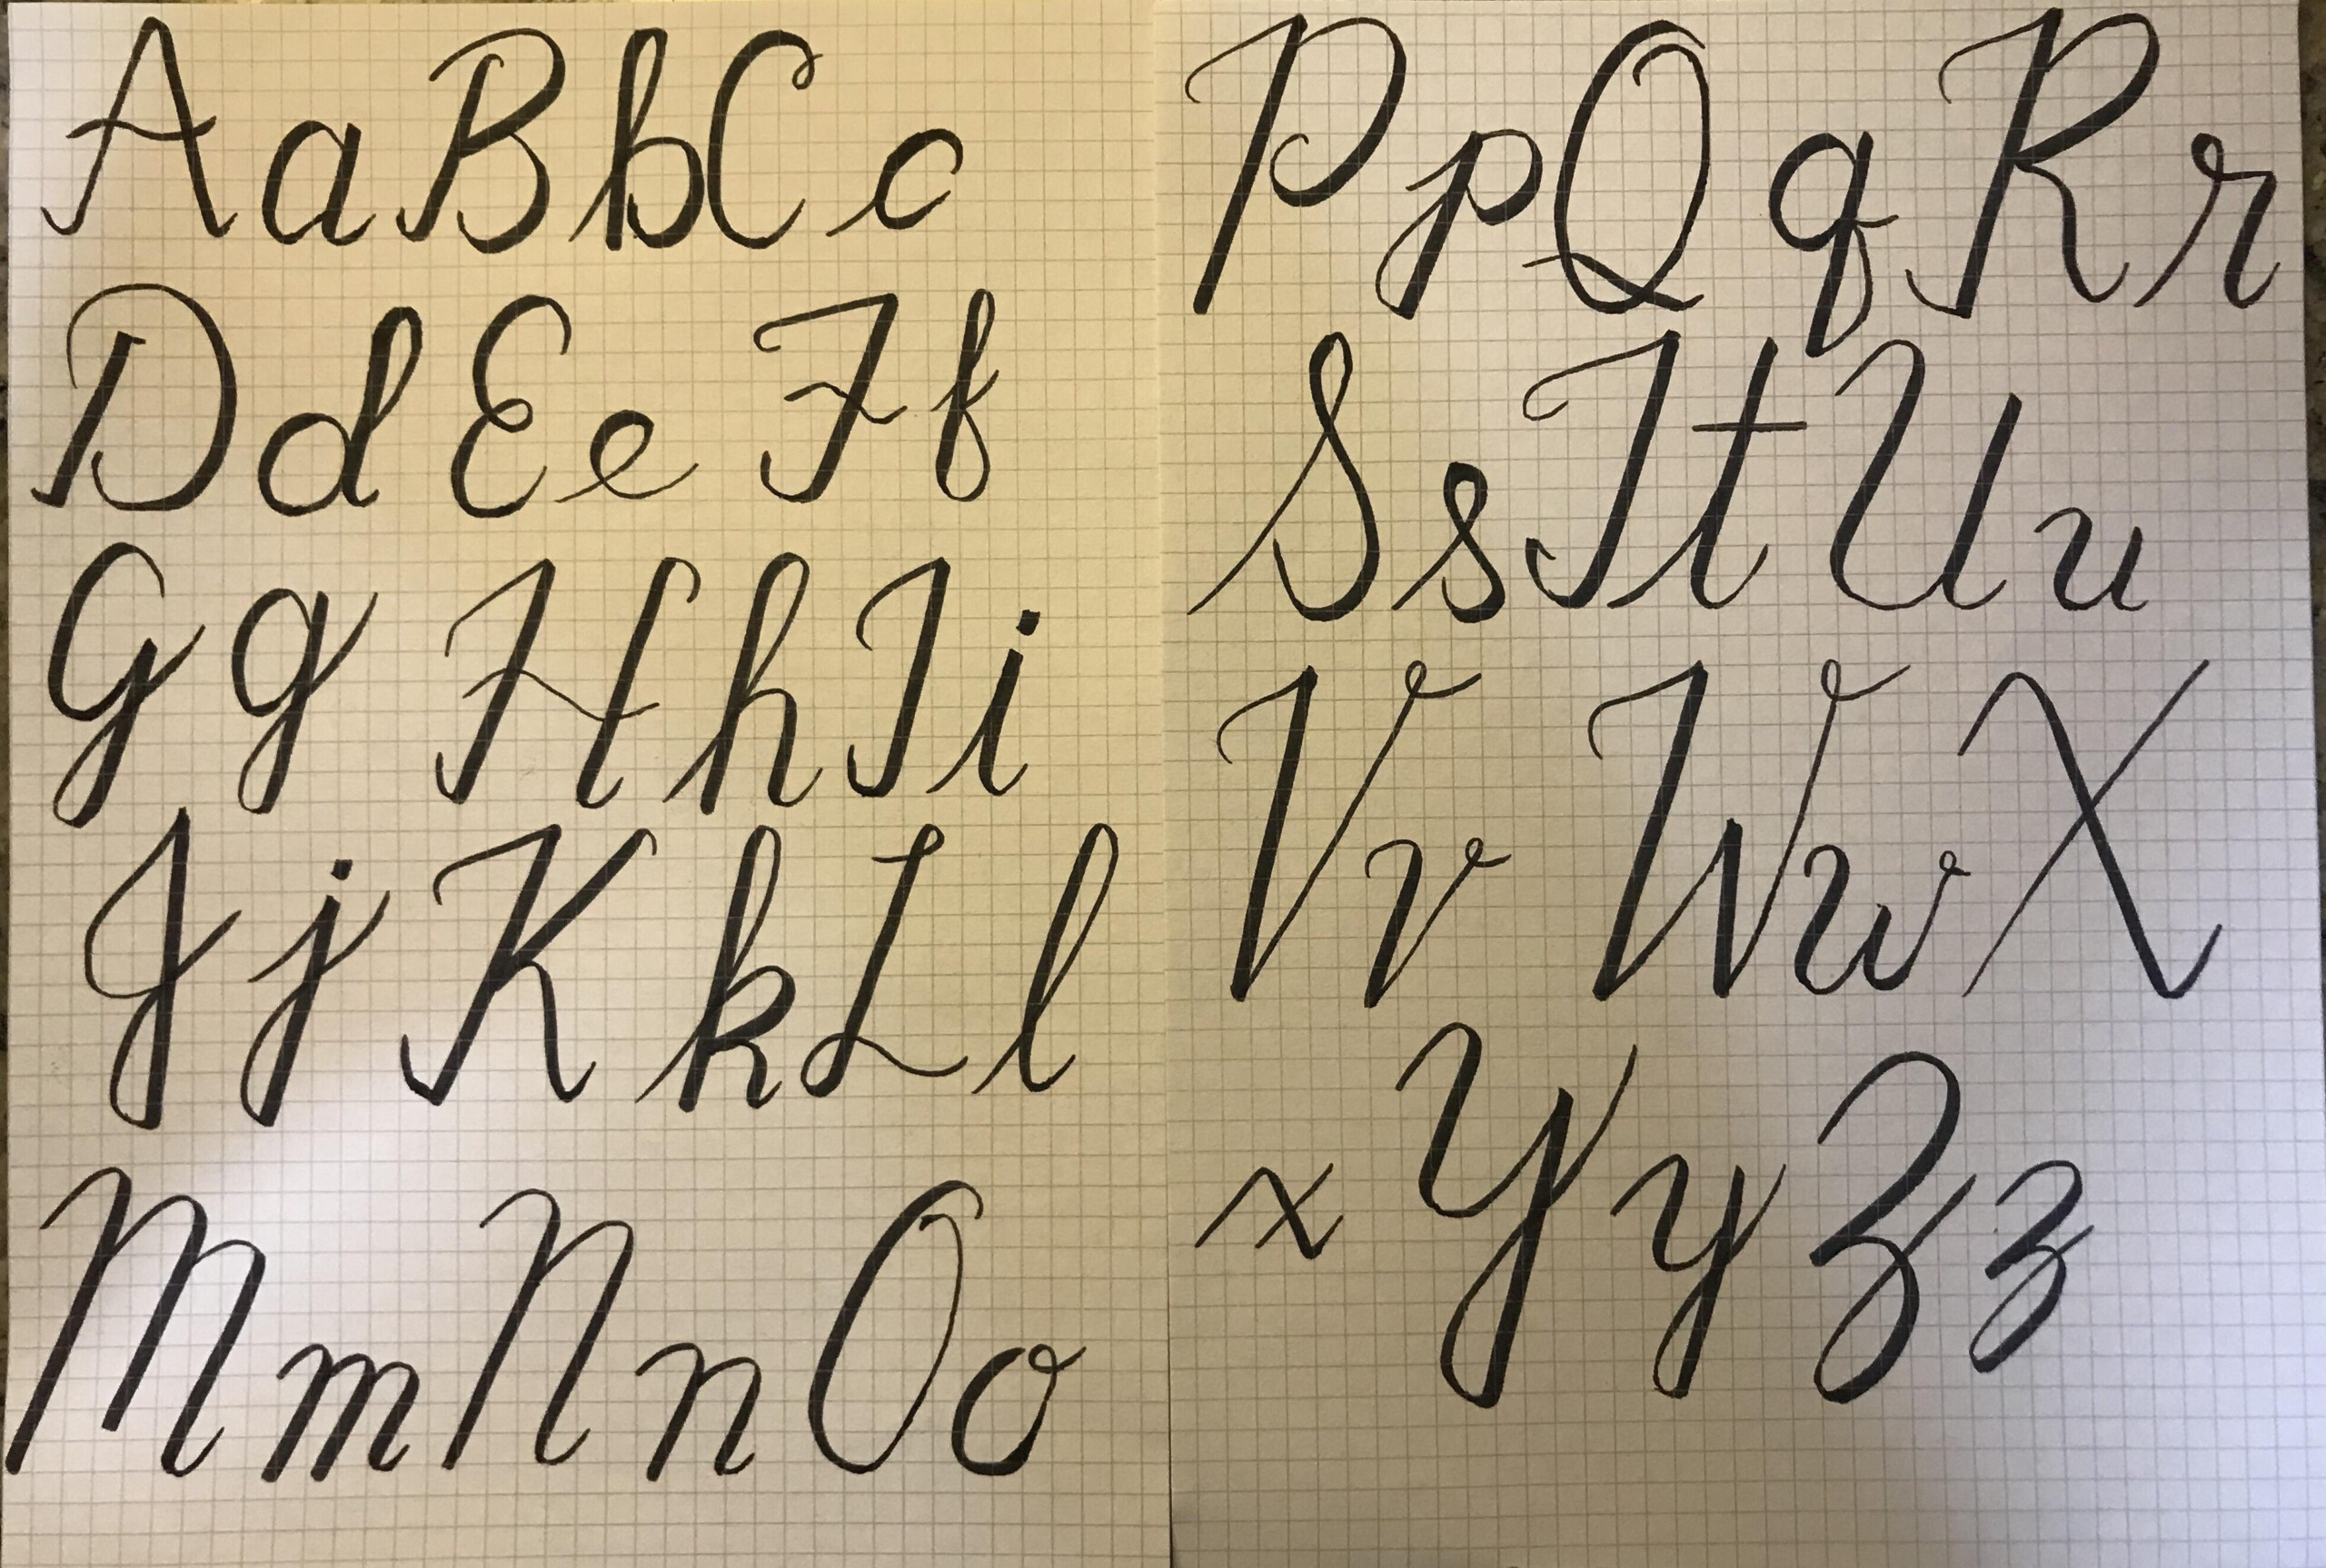 Very New, Day #4 Allura Regular Script With Brush Marker